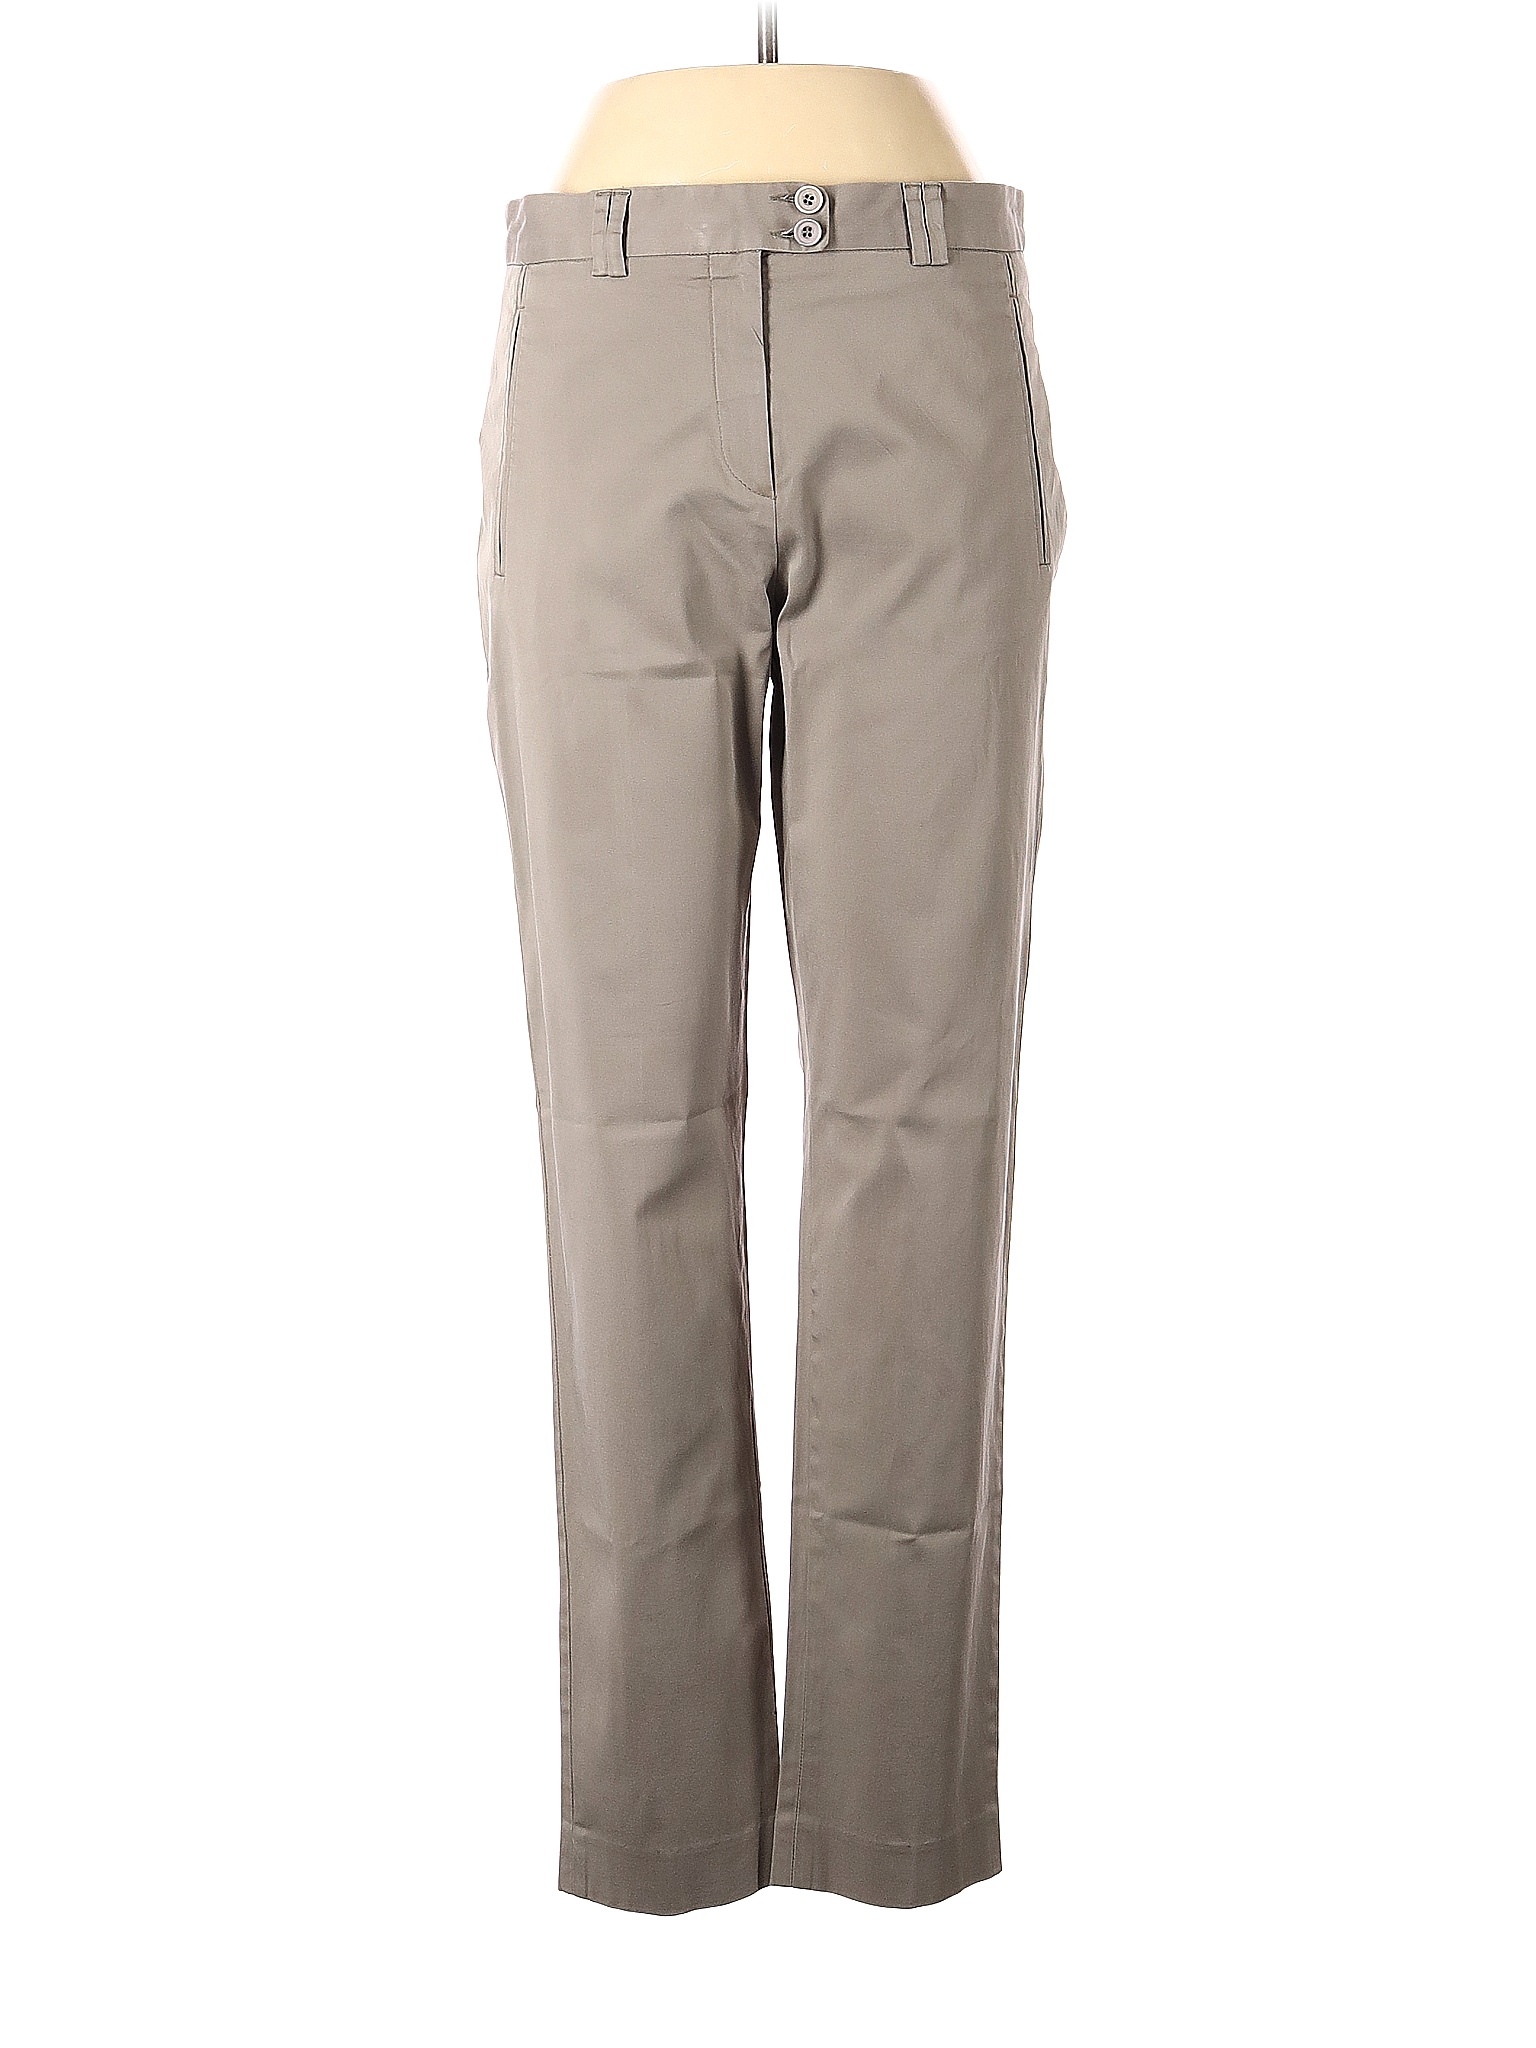 Moda Pantalones Pantalones de lana René Lezard Ren\u00e9 Lezard Pantal\u00f3n de lana gris claro estilo \u00abbusiness\u00bb 